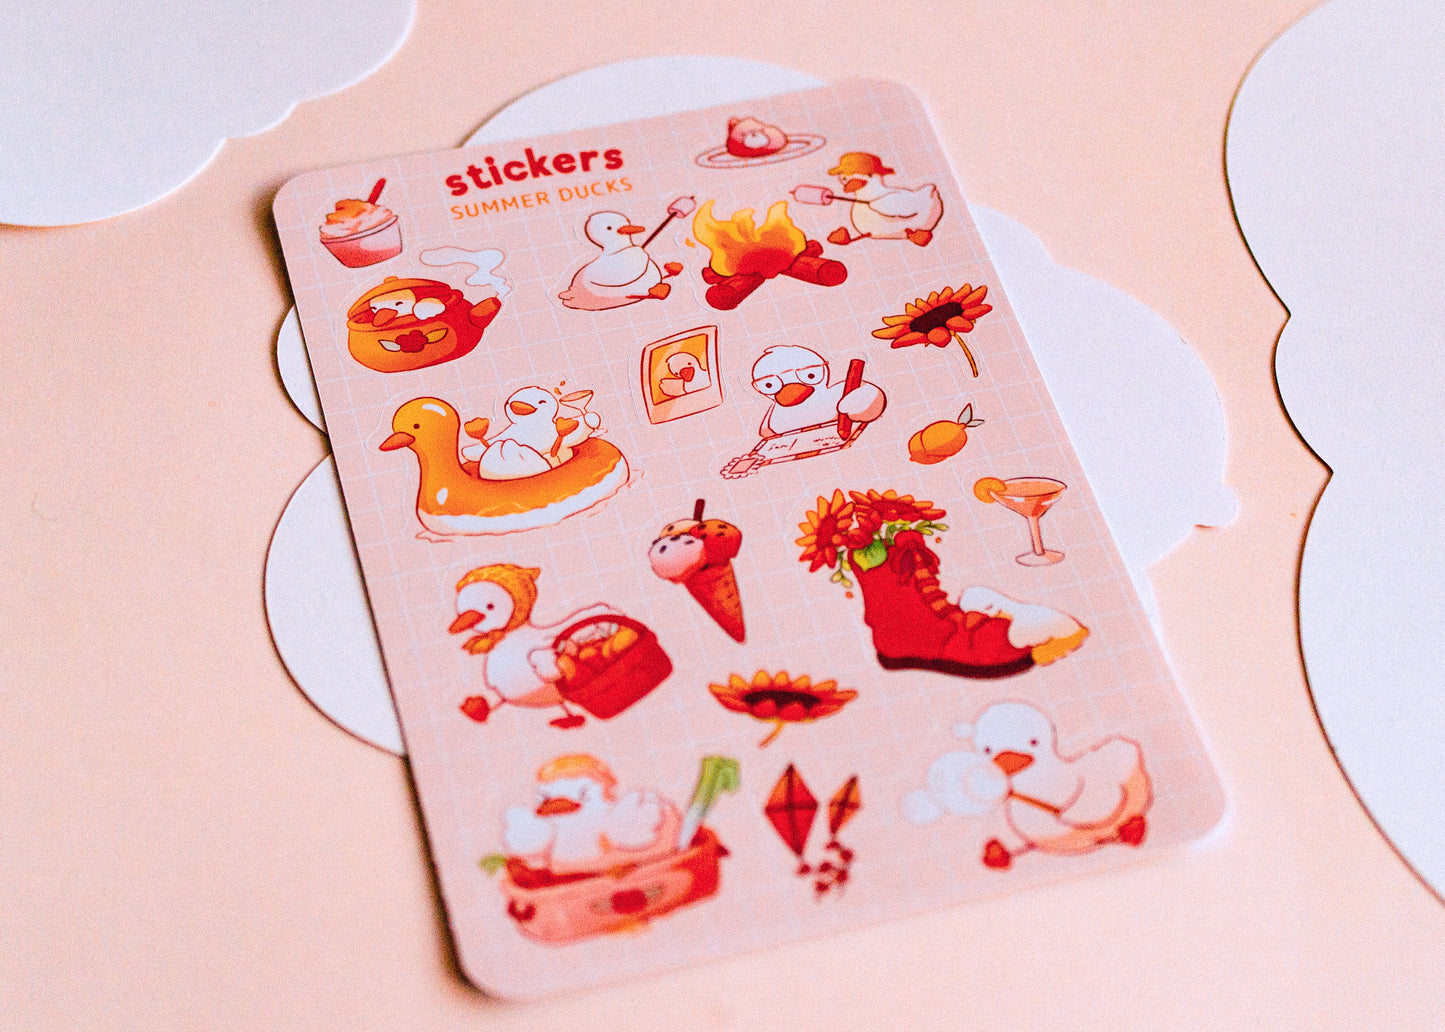 Sticker sheet - Summerly ducks 